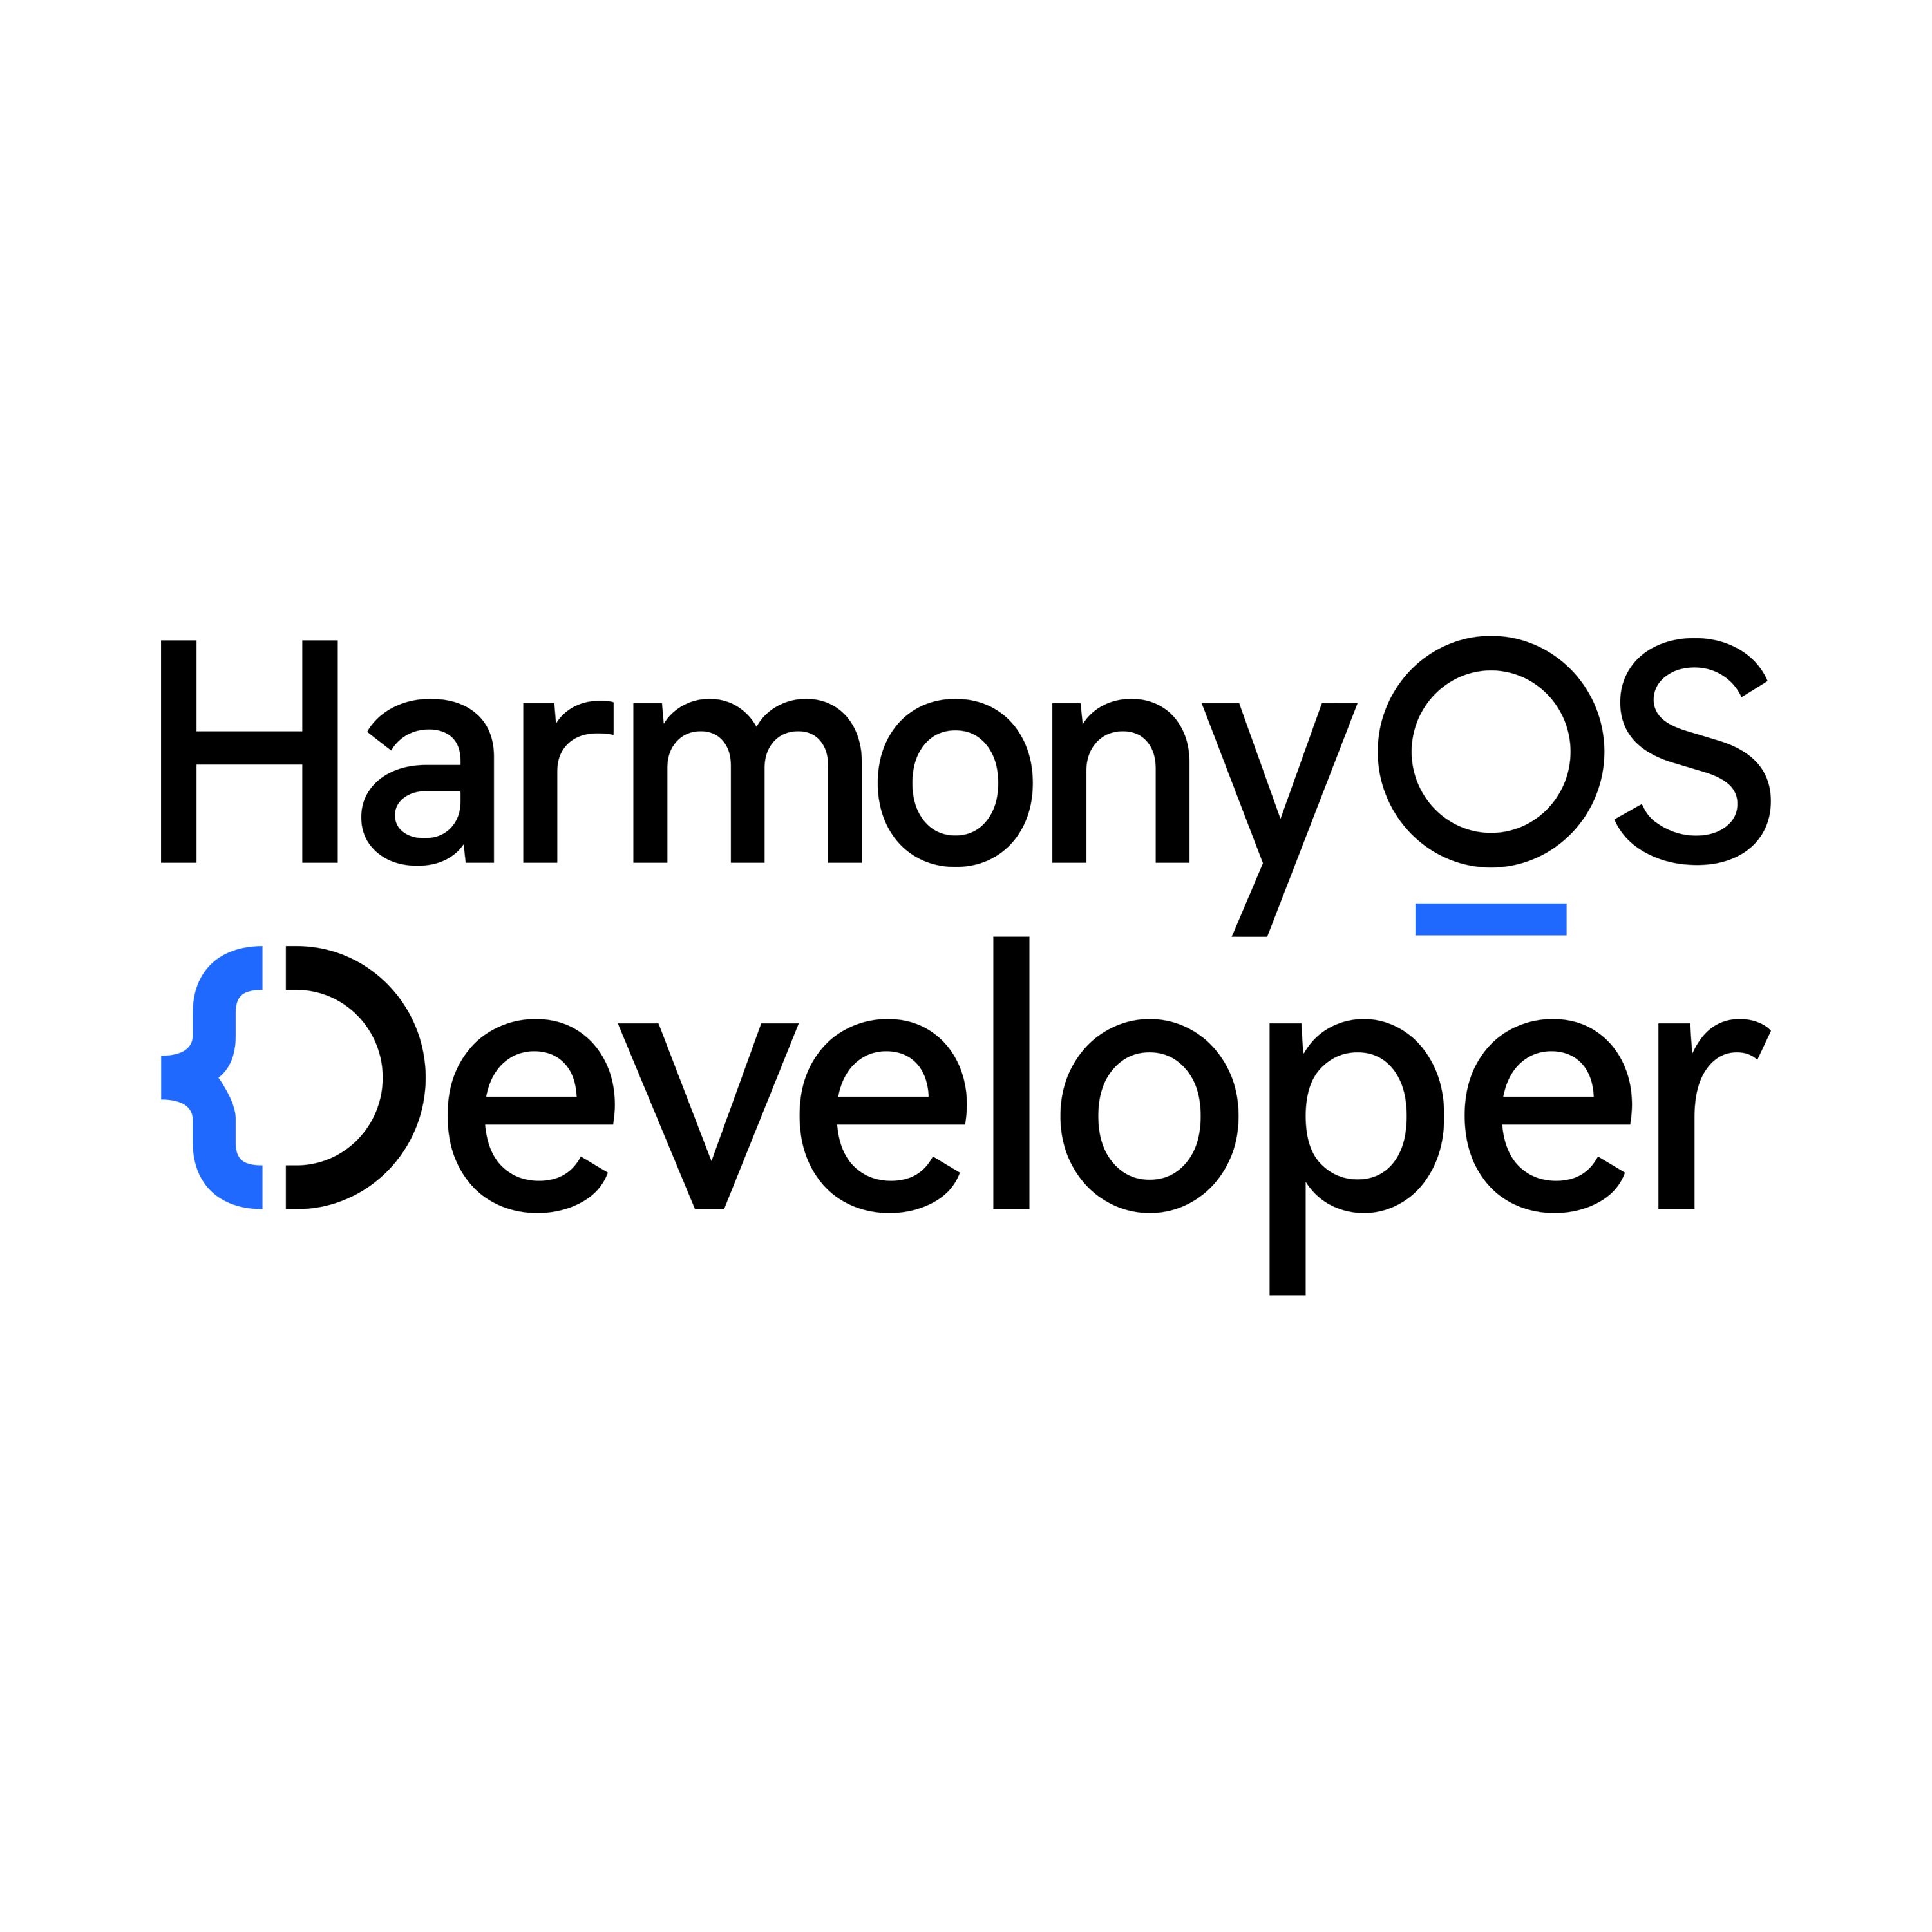 Harmony Os Developer Logo Transparent Picture